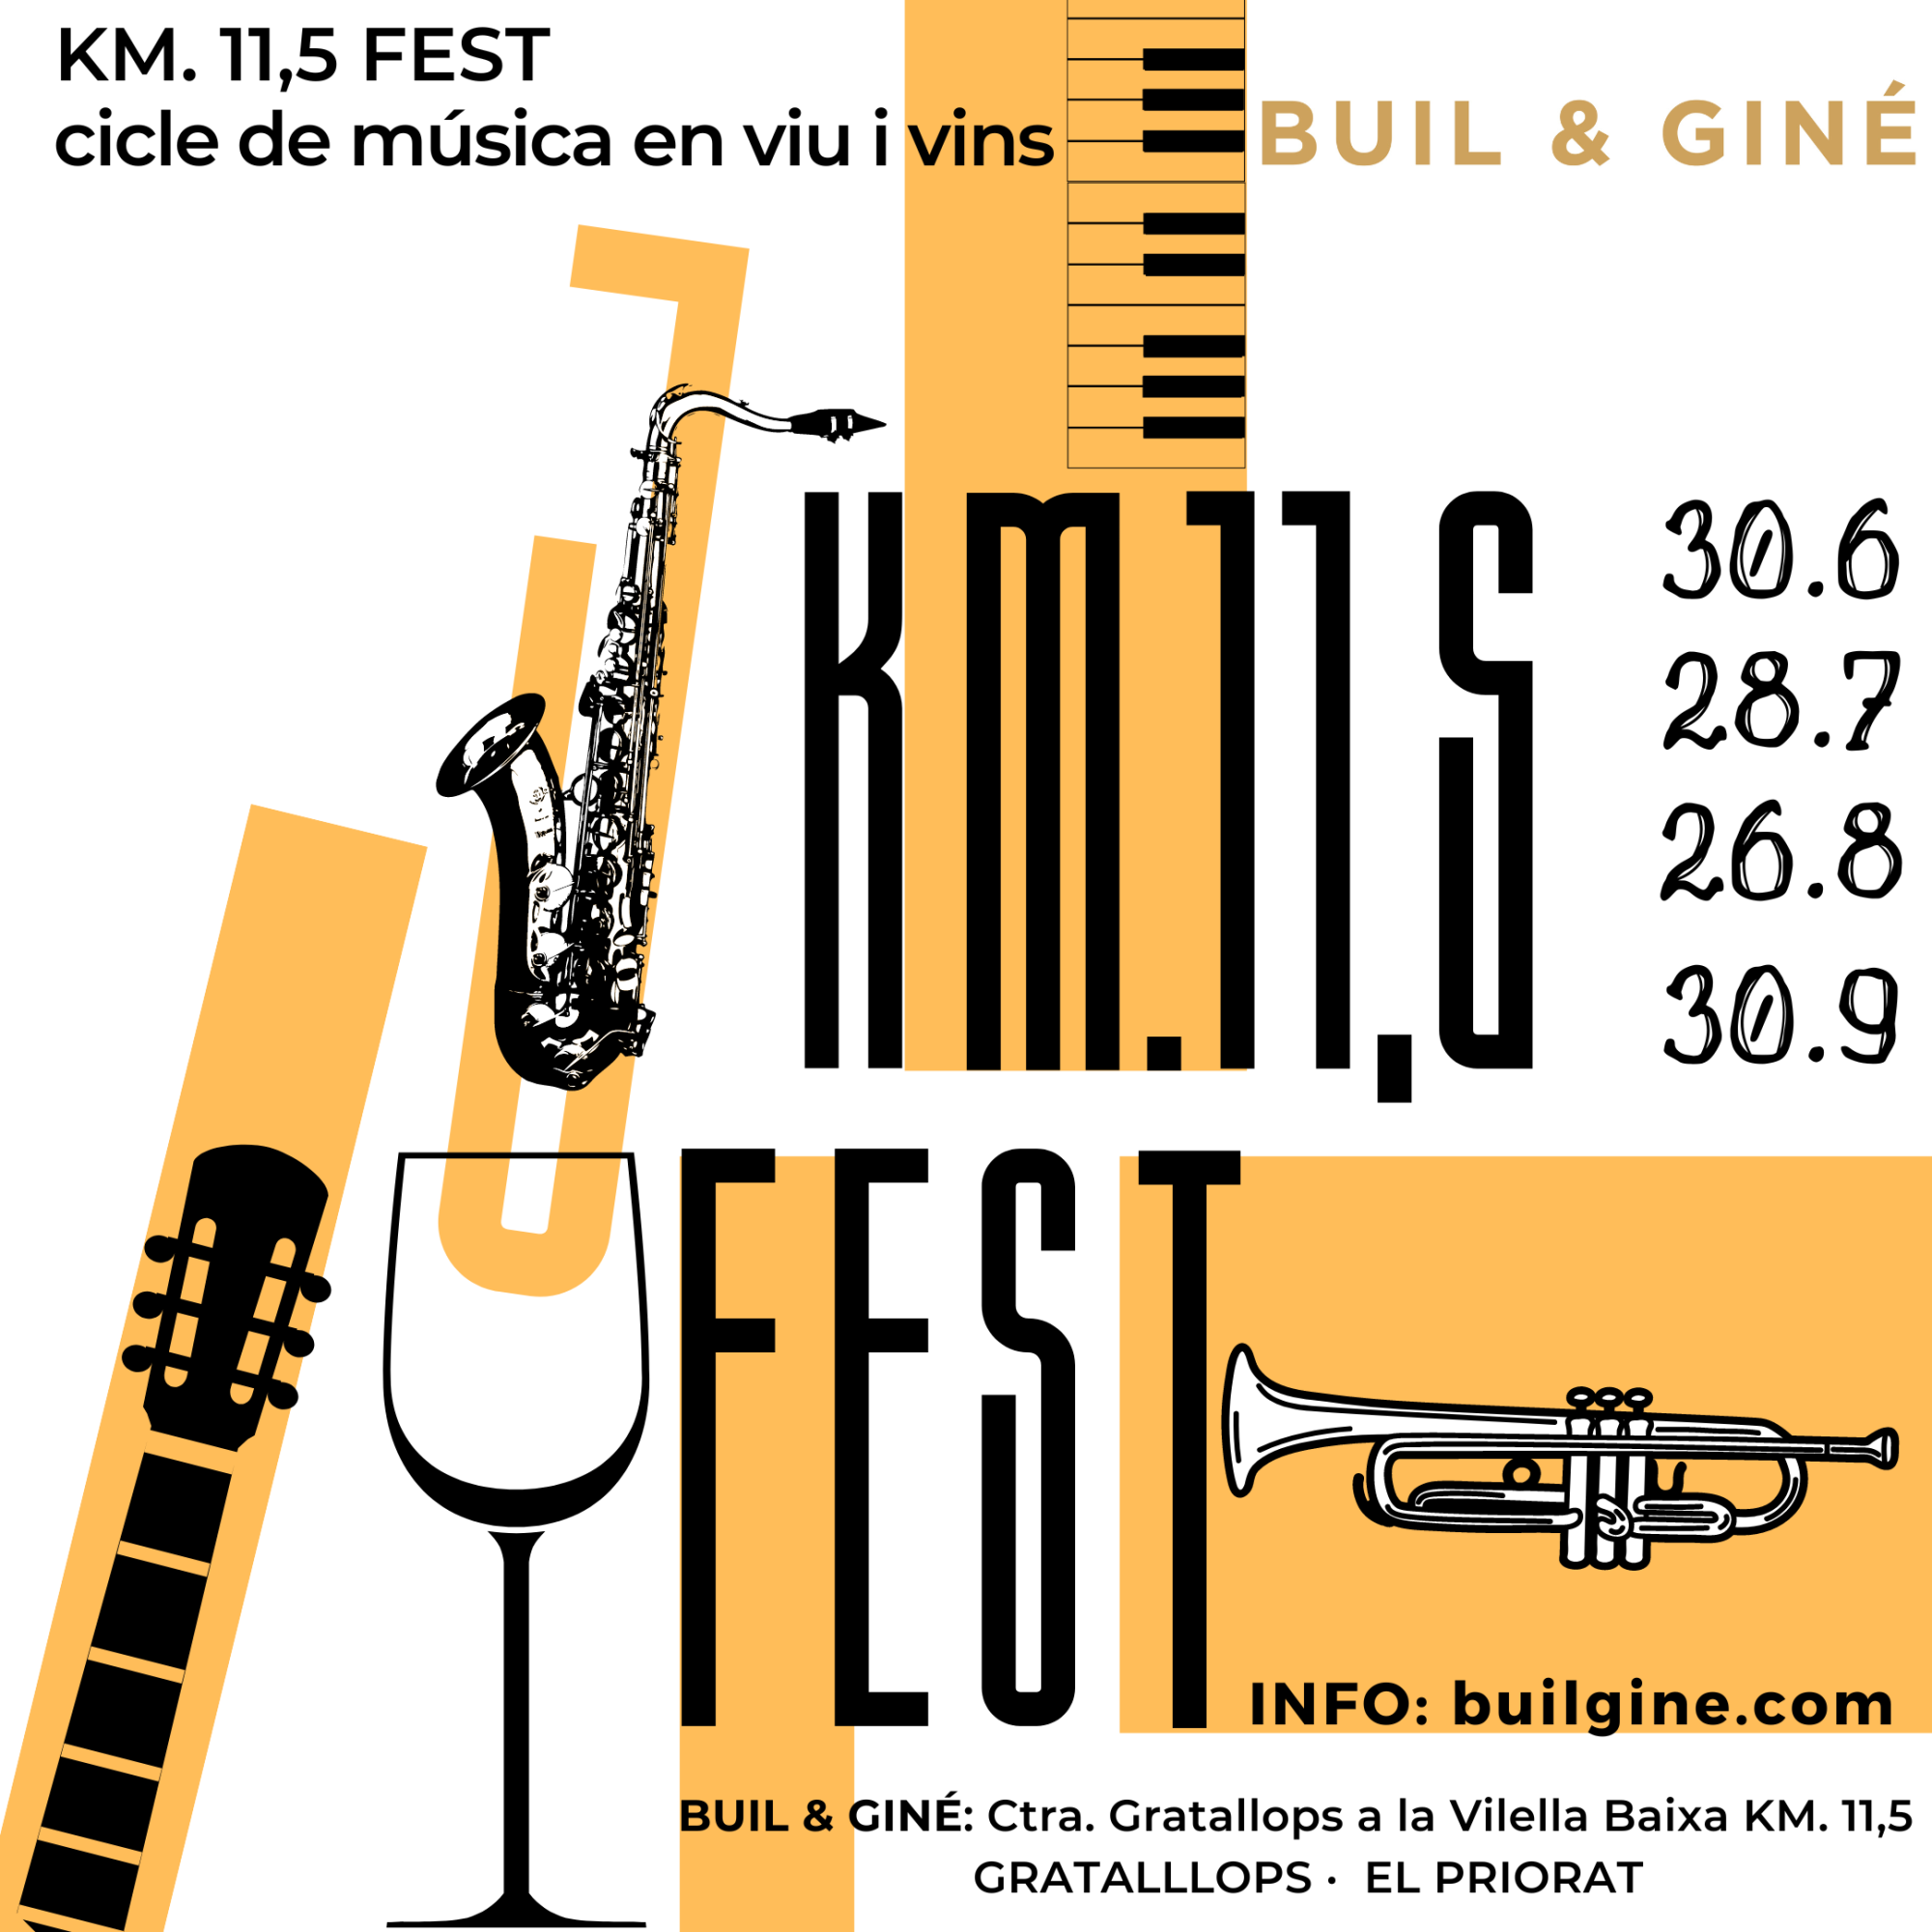 Km. 11,5 Fest: I Cicle de música i vins a Buil & Giné